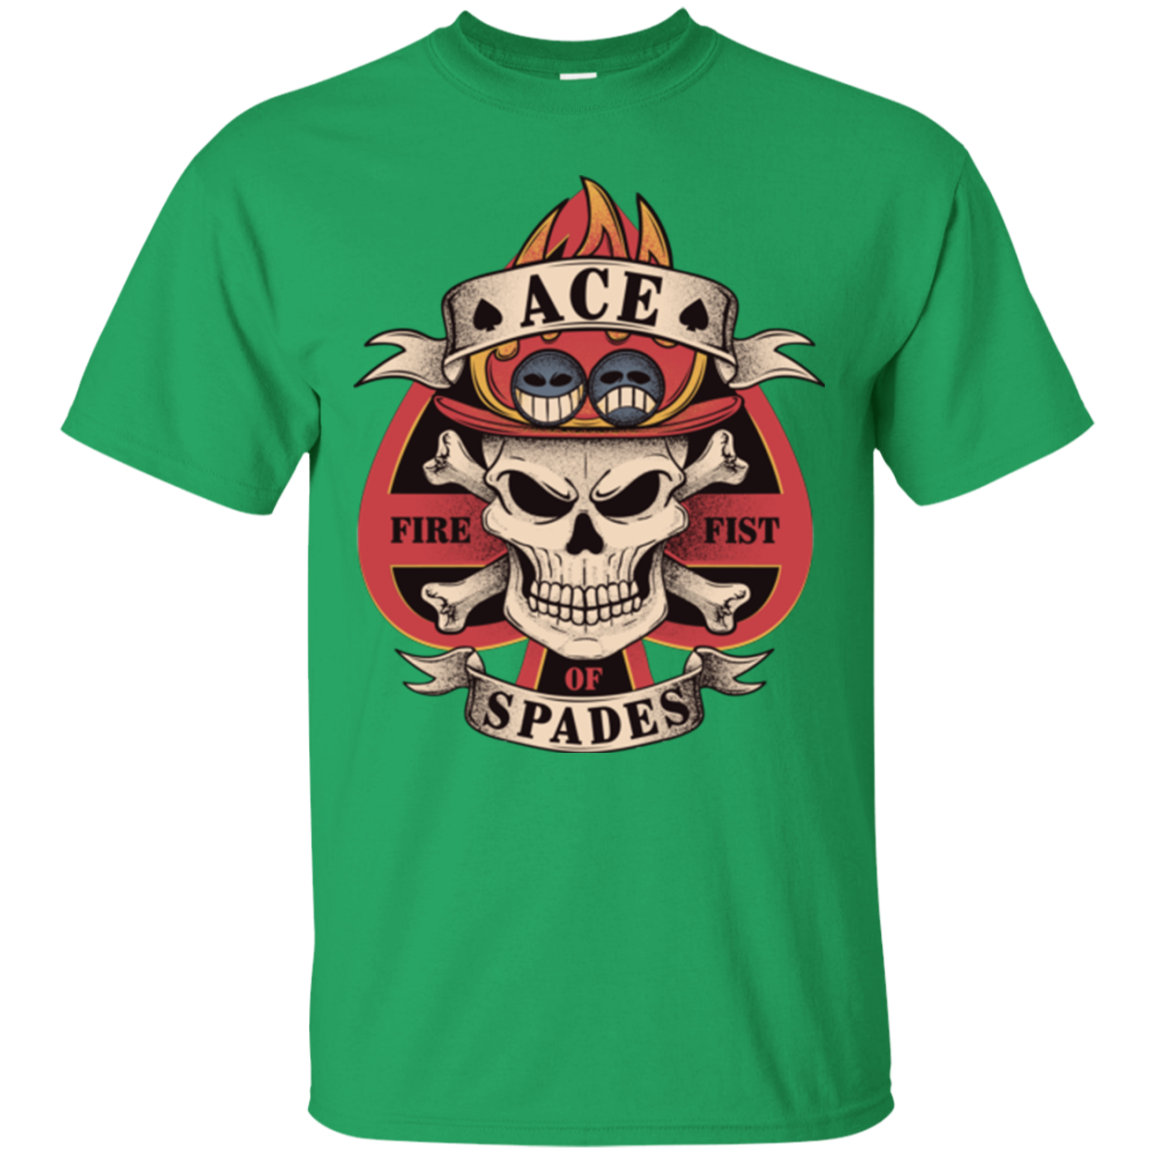 Ace of Spades T-Shirt